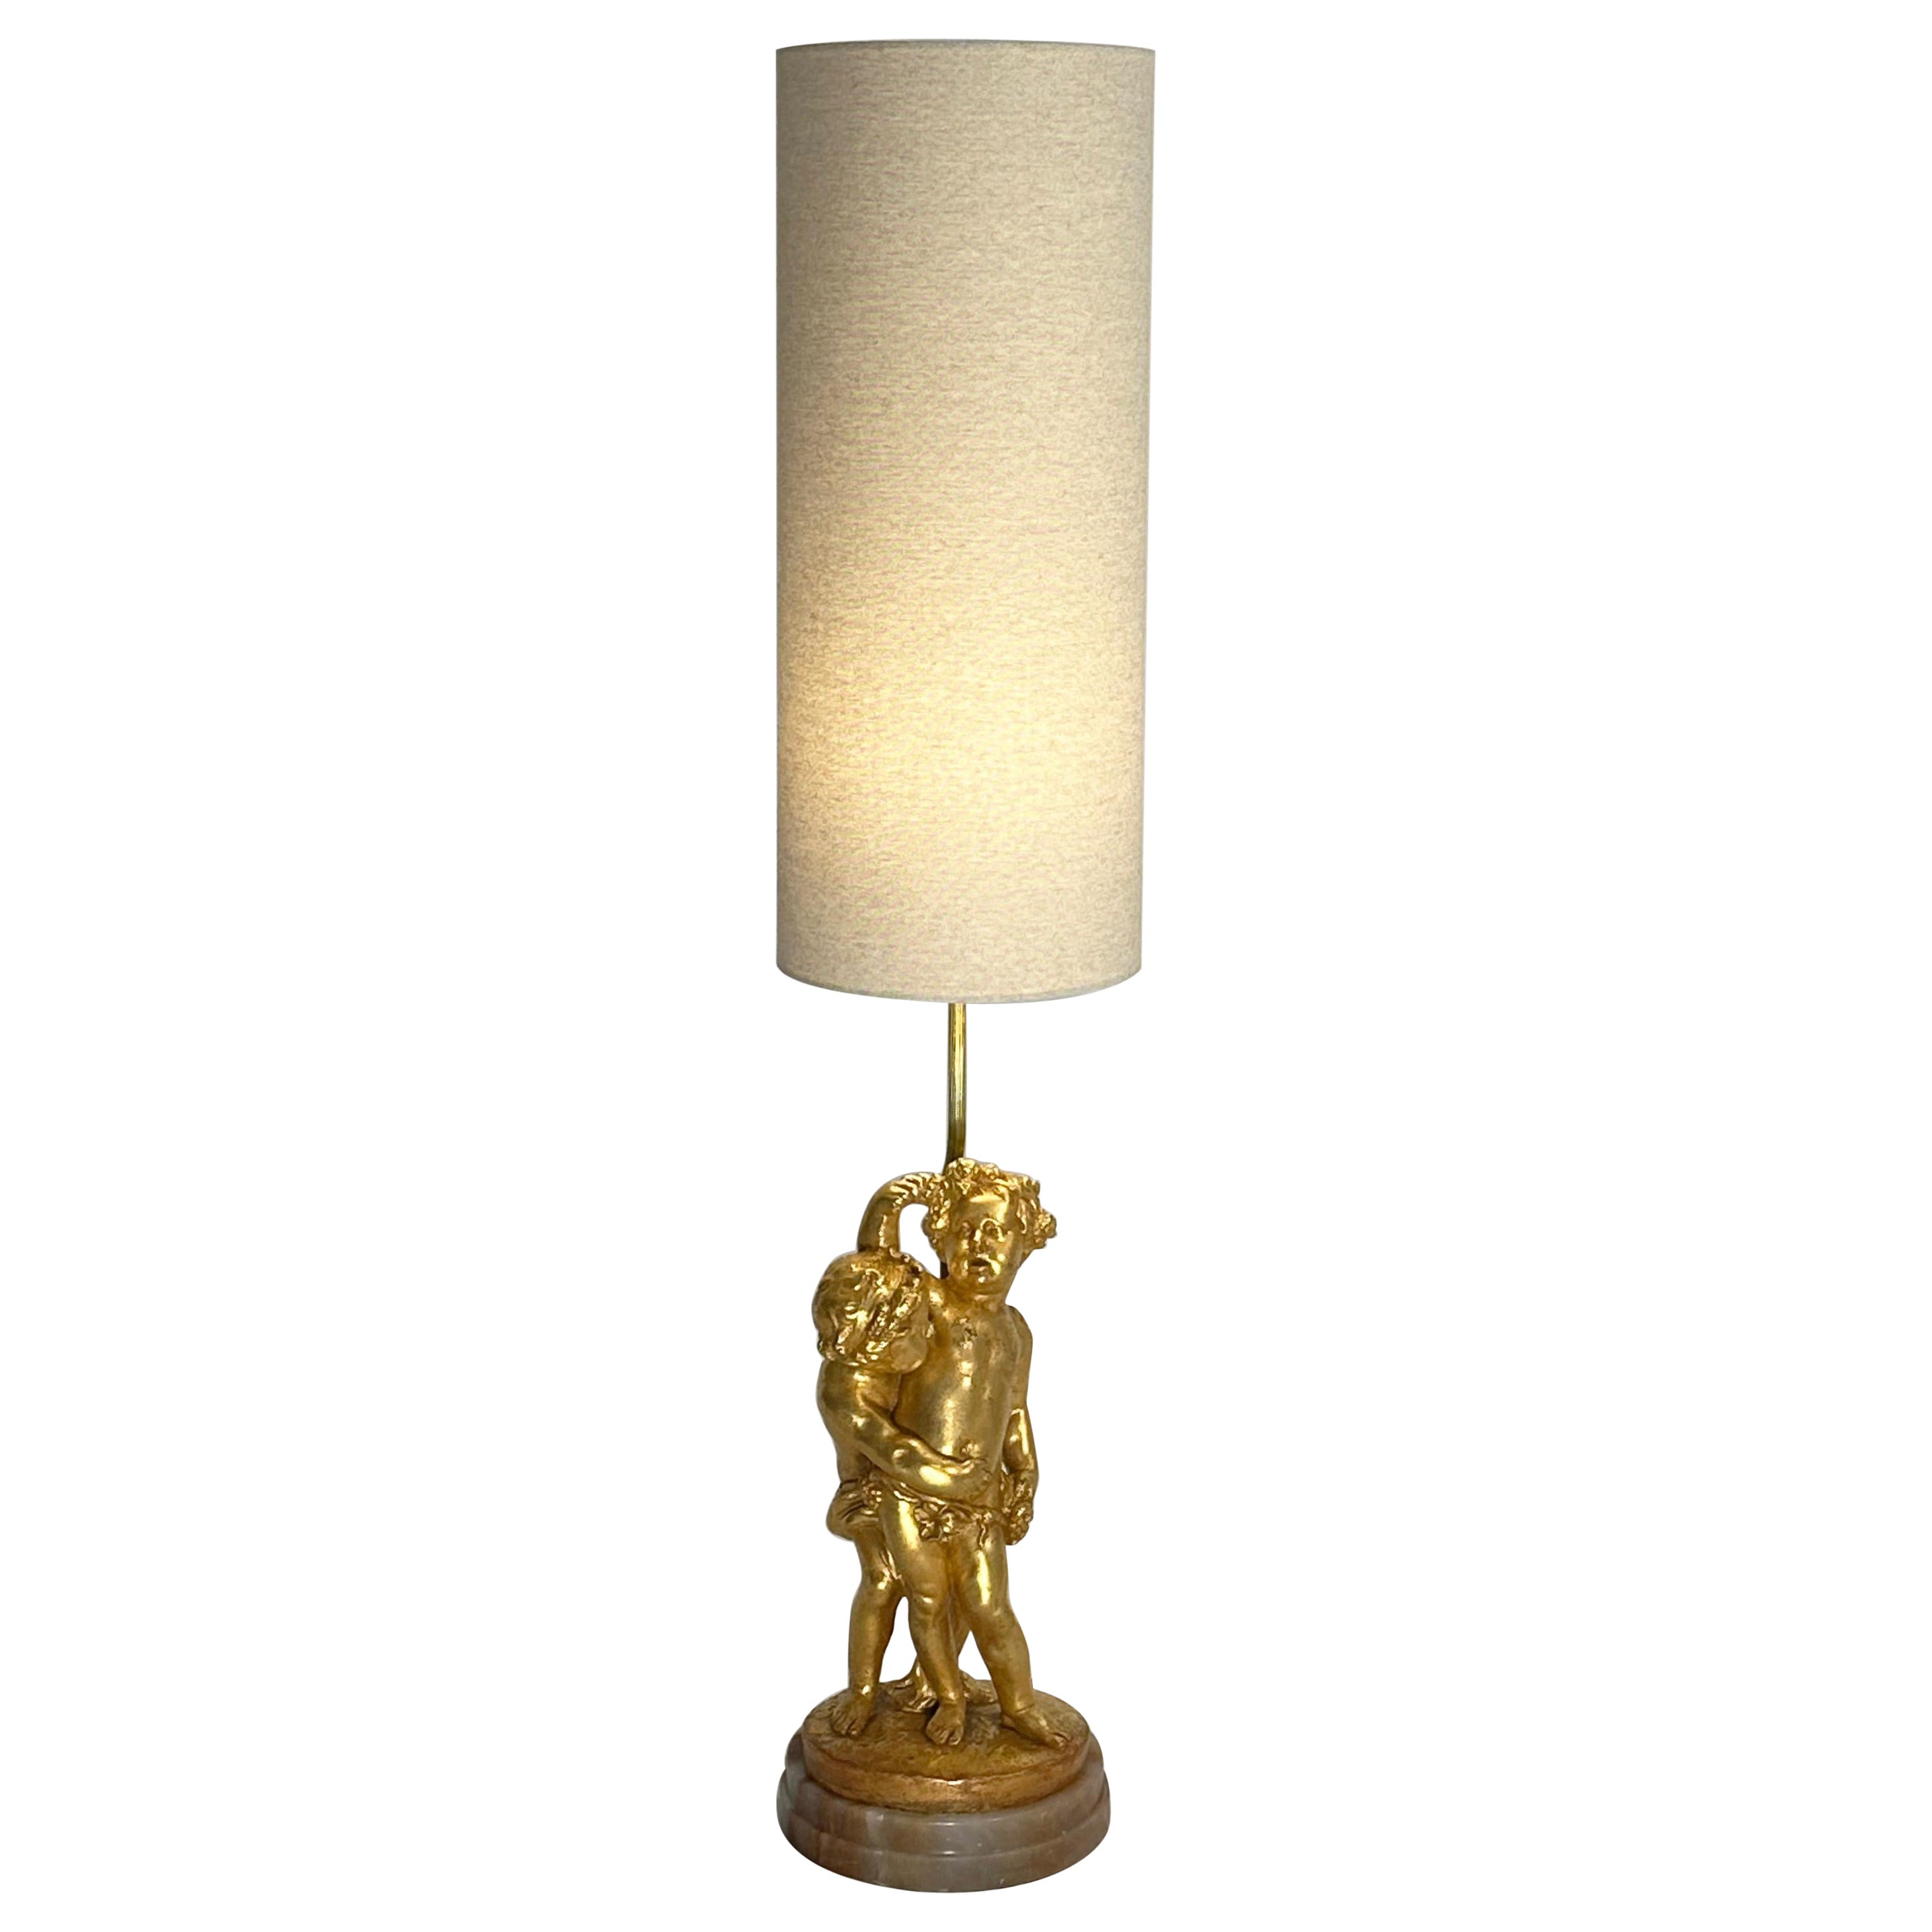 Lampe Putti vintage de style rococo dorée sur base en onyx